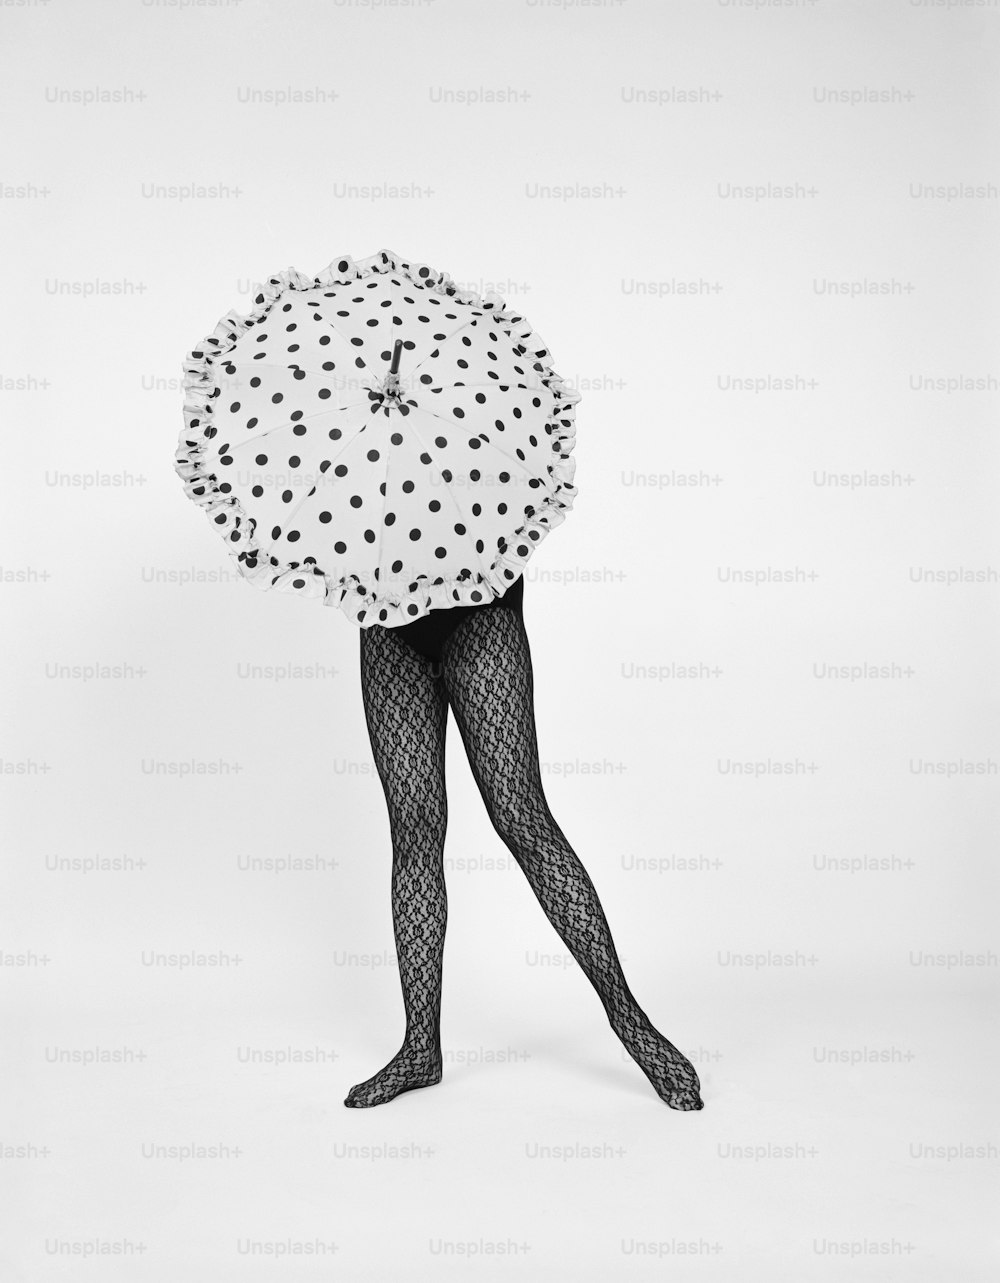 UNITED STATES - CIRCA 1960s: Woman wearing stockings and holding polka dot umbrella.